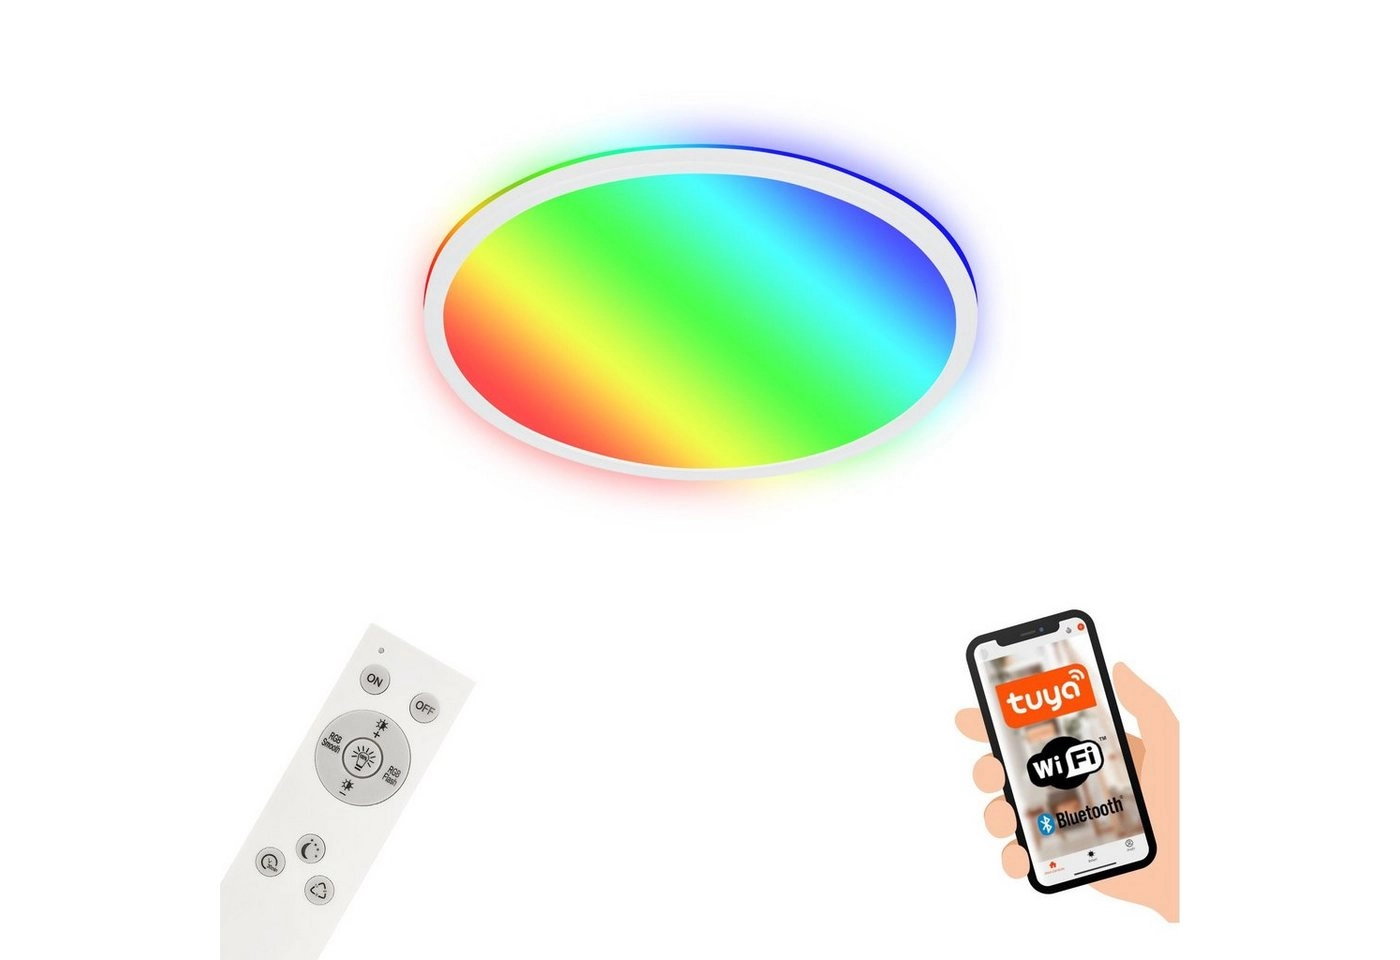 B smart RGB/W-LED Panel, Ø 42 cm, LED-Platine, 22 W, 2700 lm, weiß